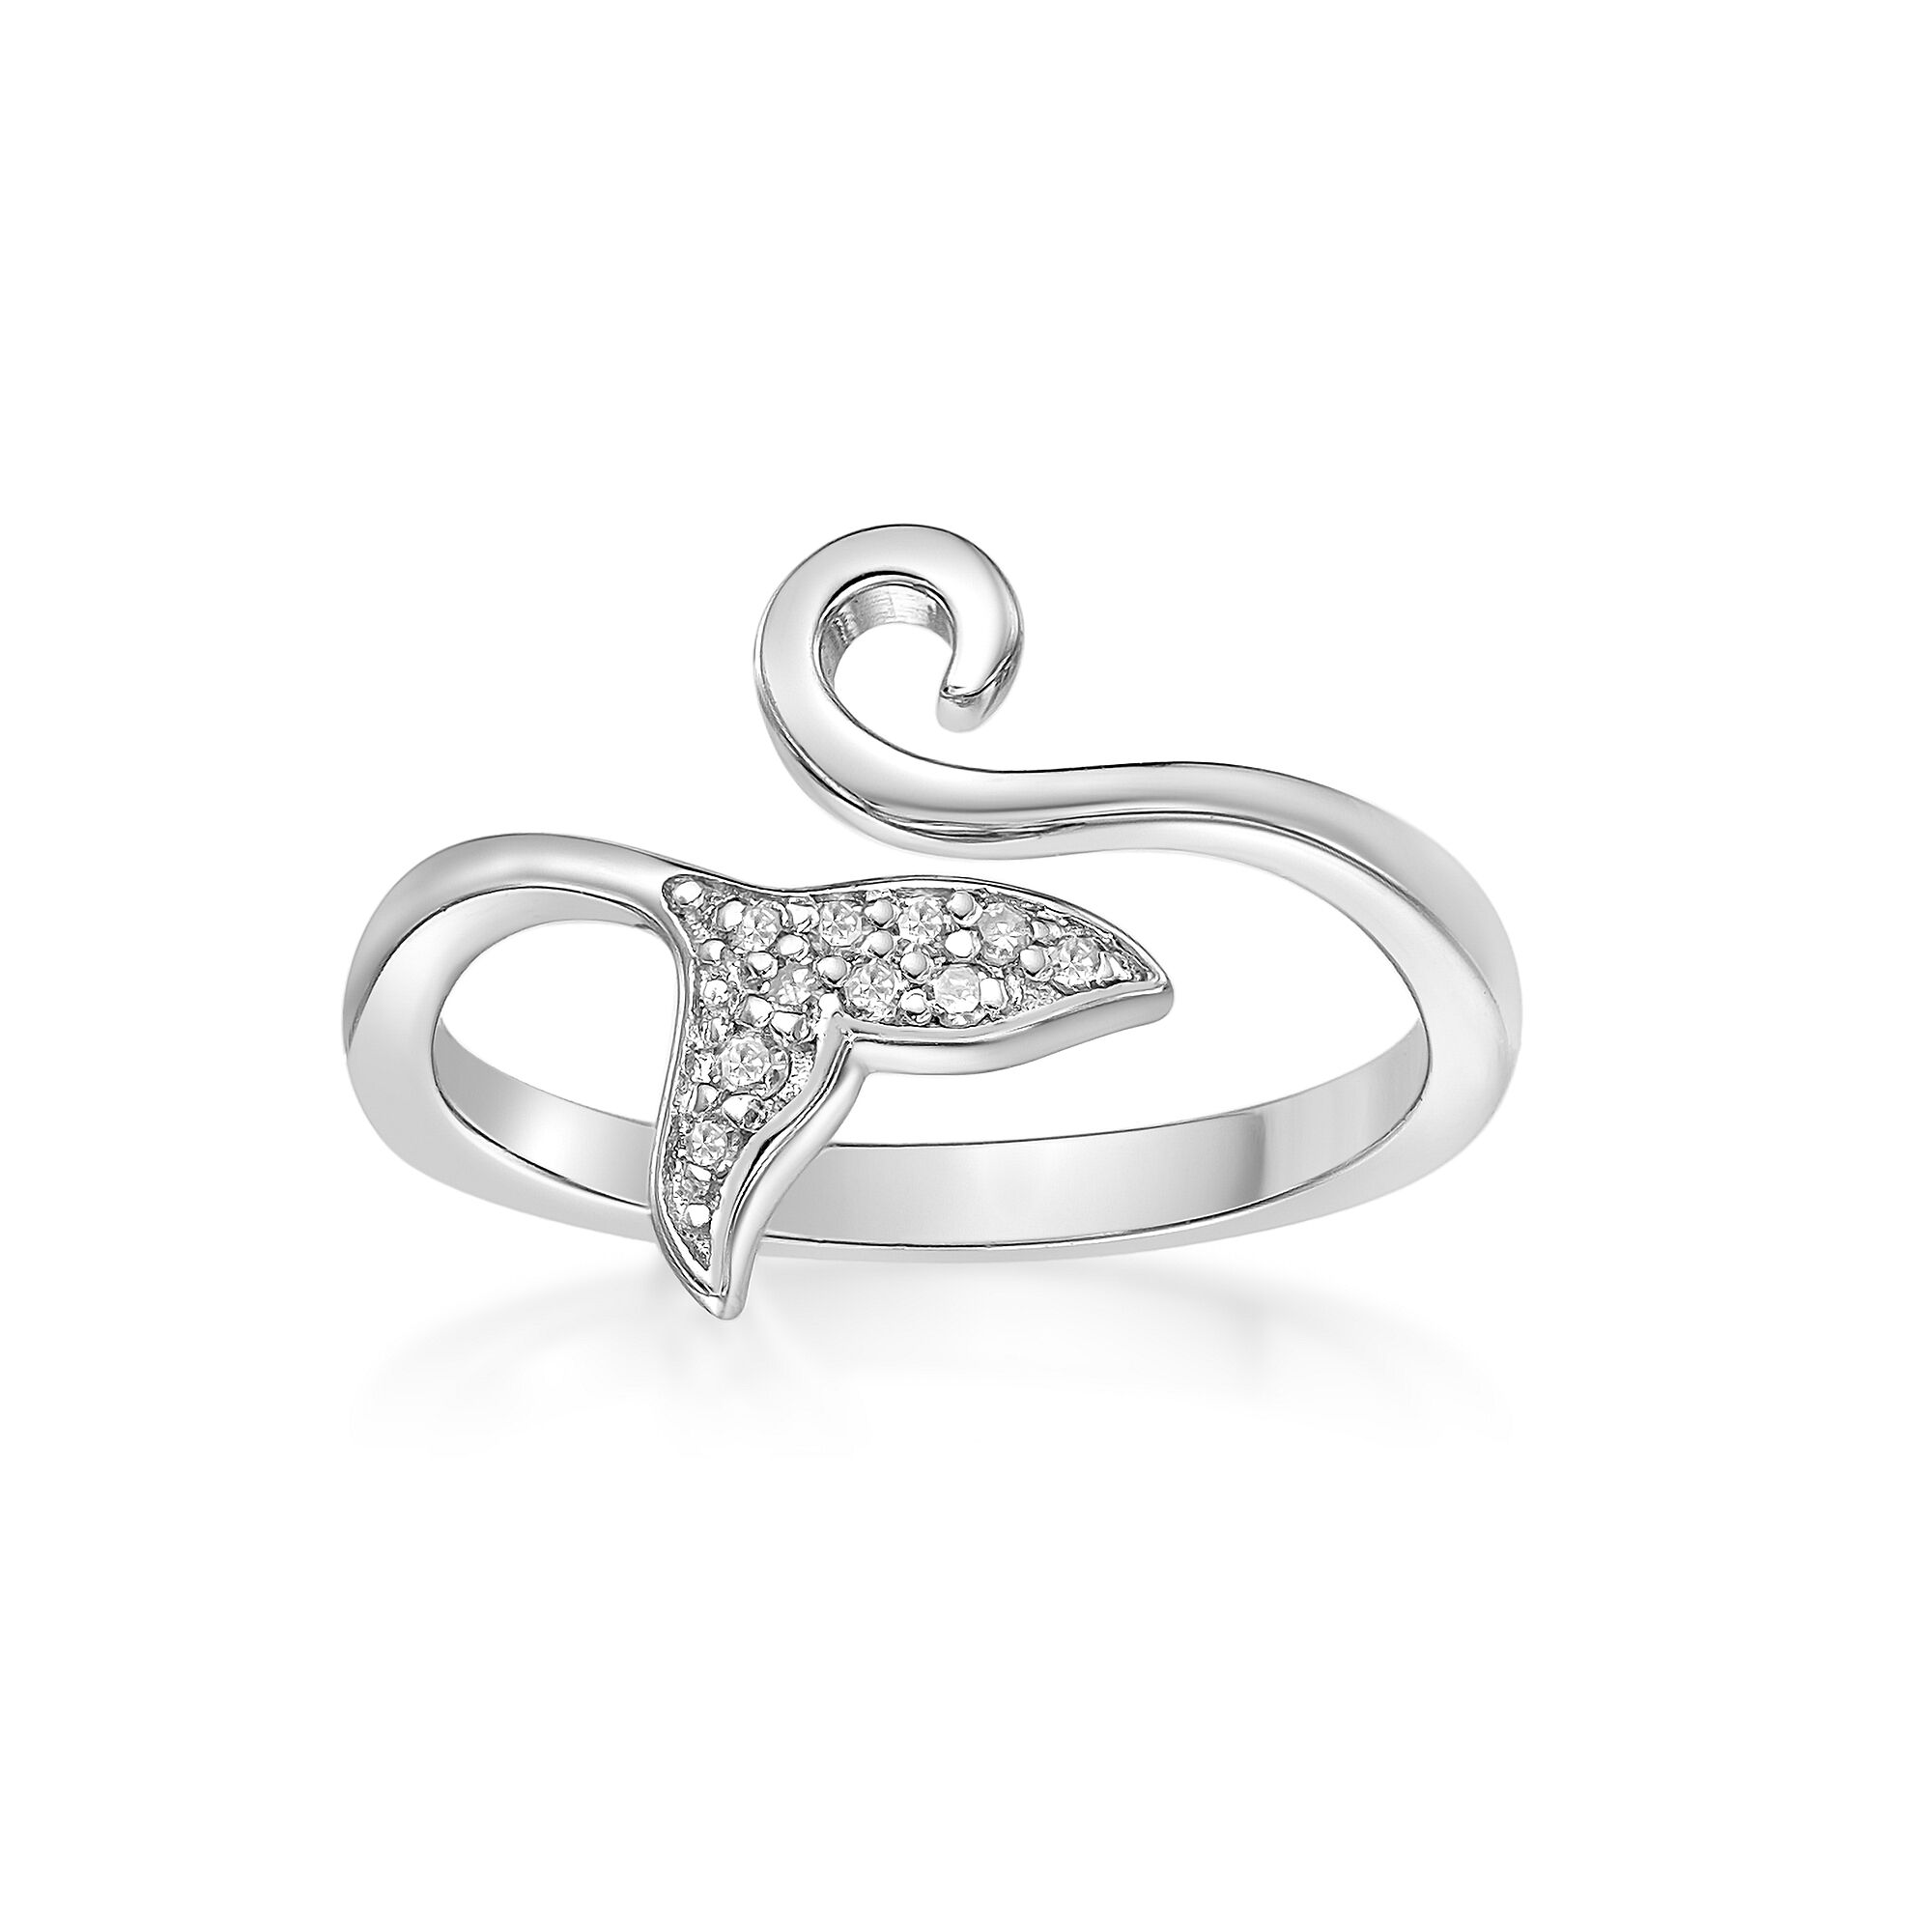 Lavari Jewelers Women's Mermaid Tail Adjustable Toe Ring, 925 Sterling Silver, .044 Cttw